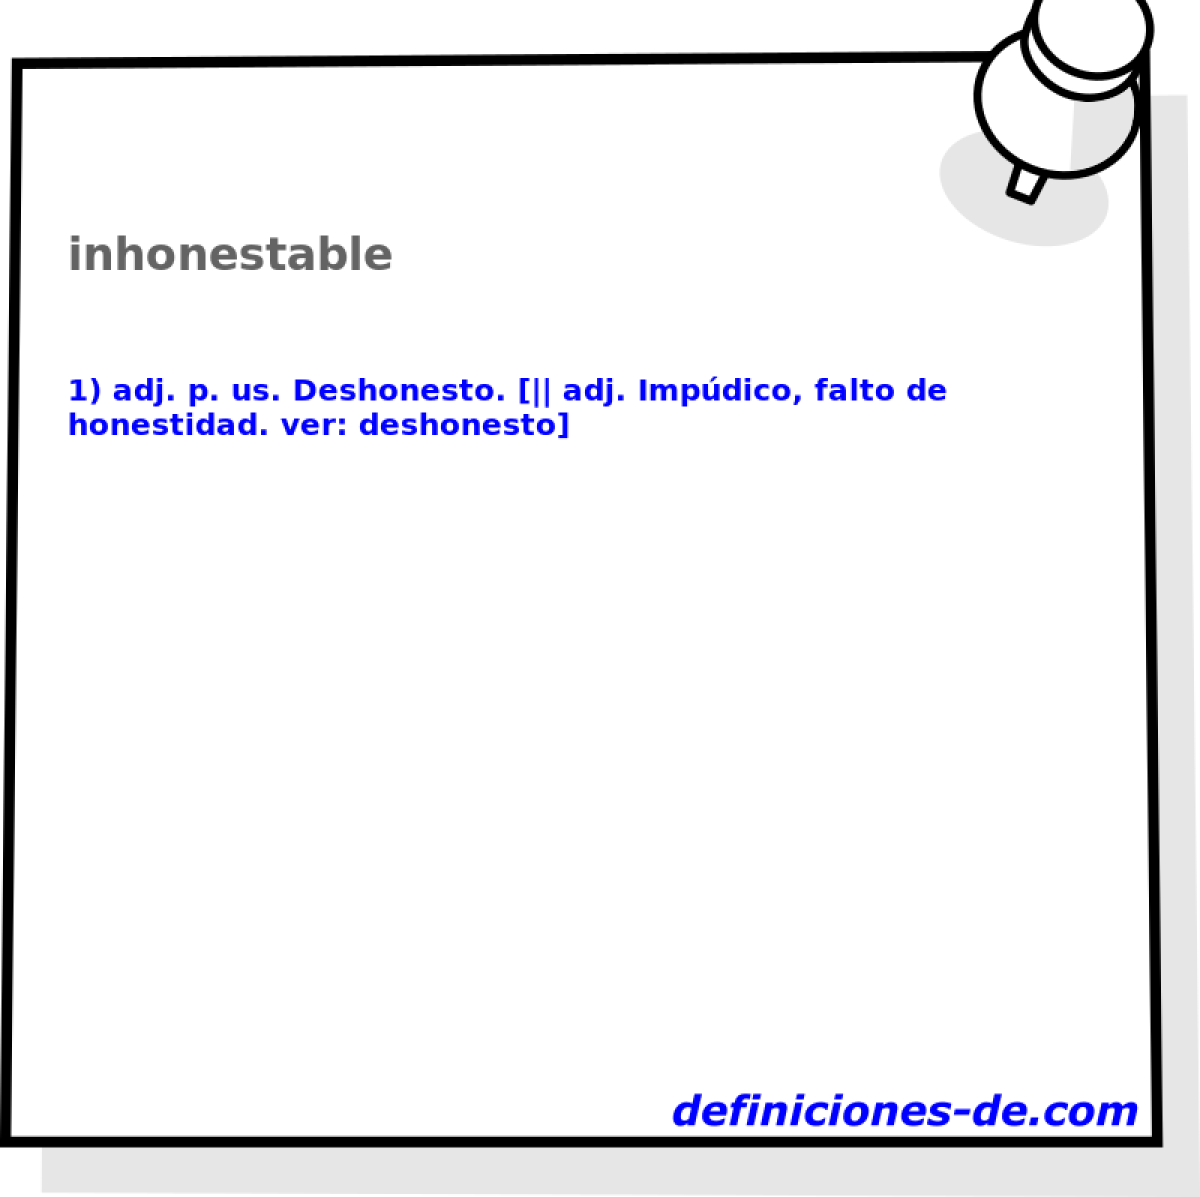 inhonestable 